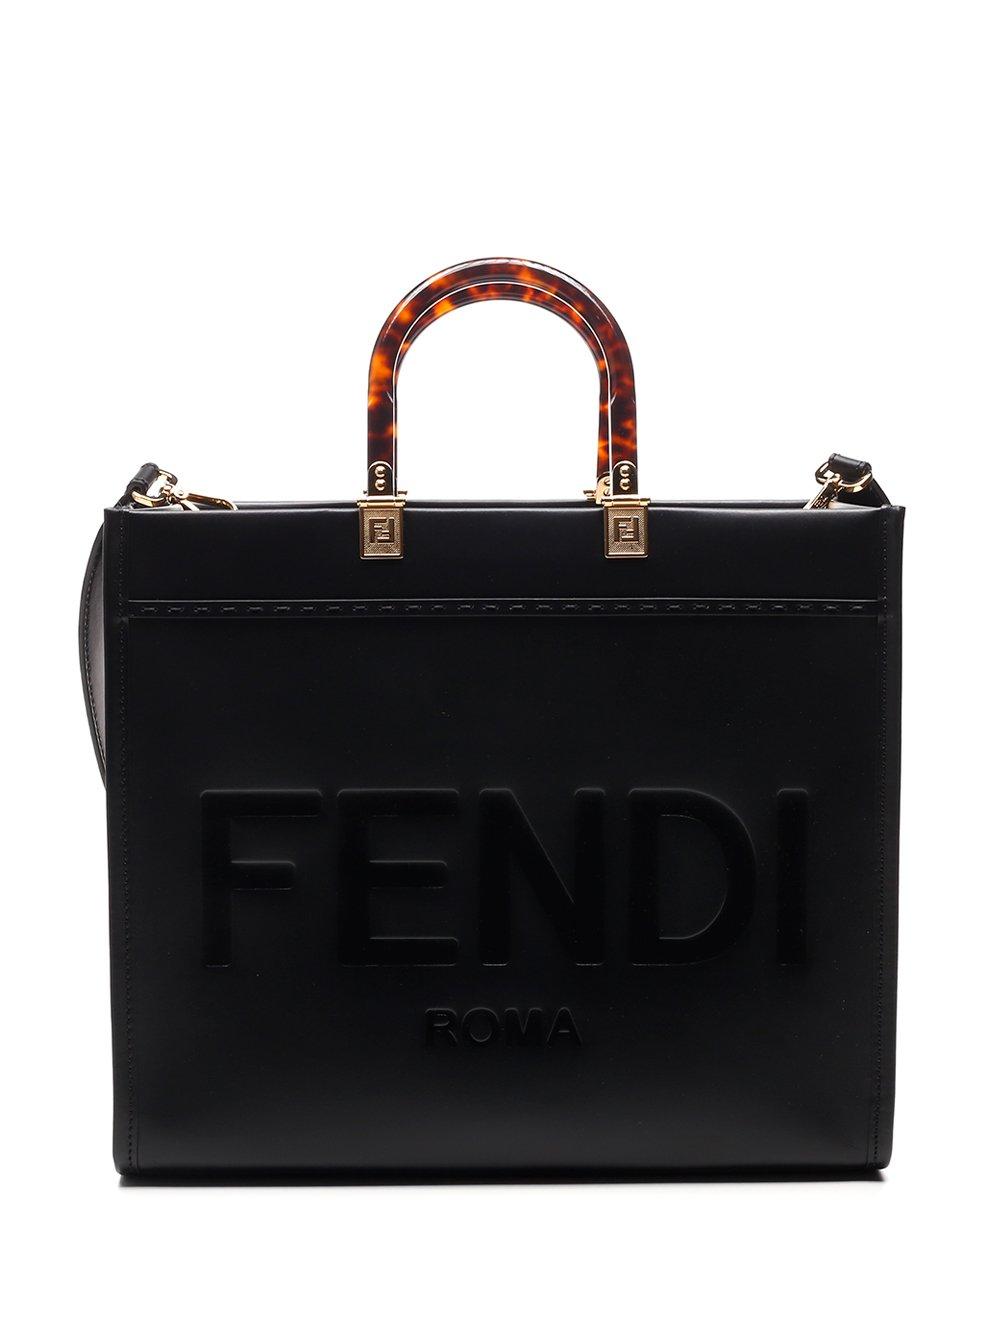 Fendi Leather Sunshine Medium Tote Bag in Black - Lyst